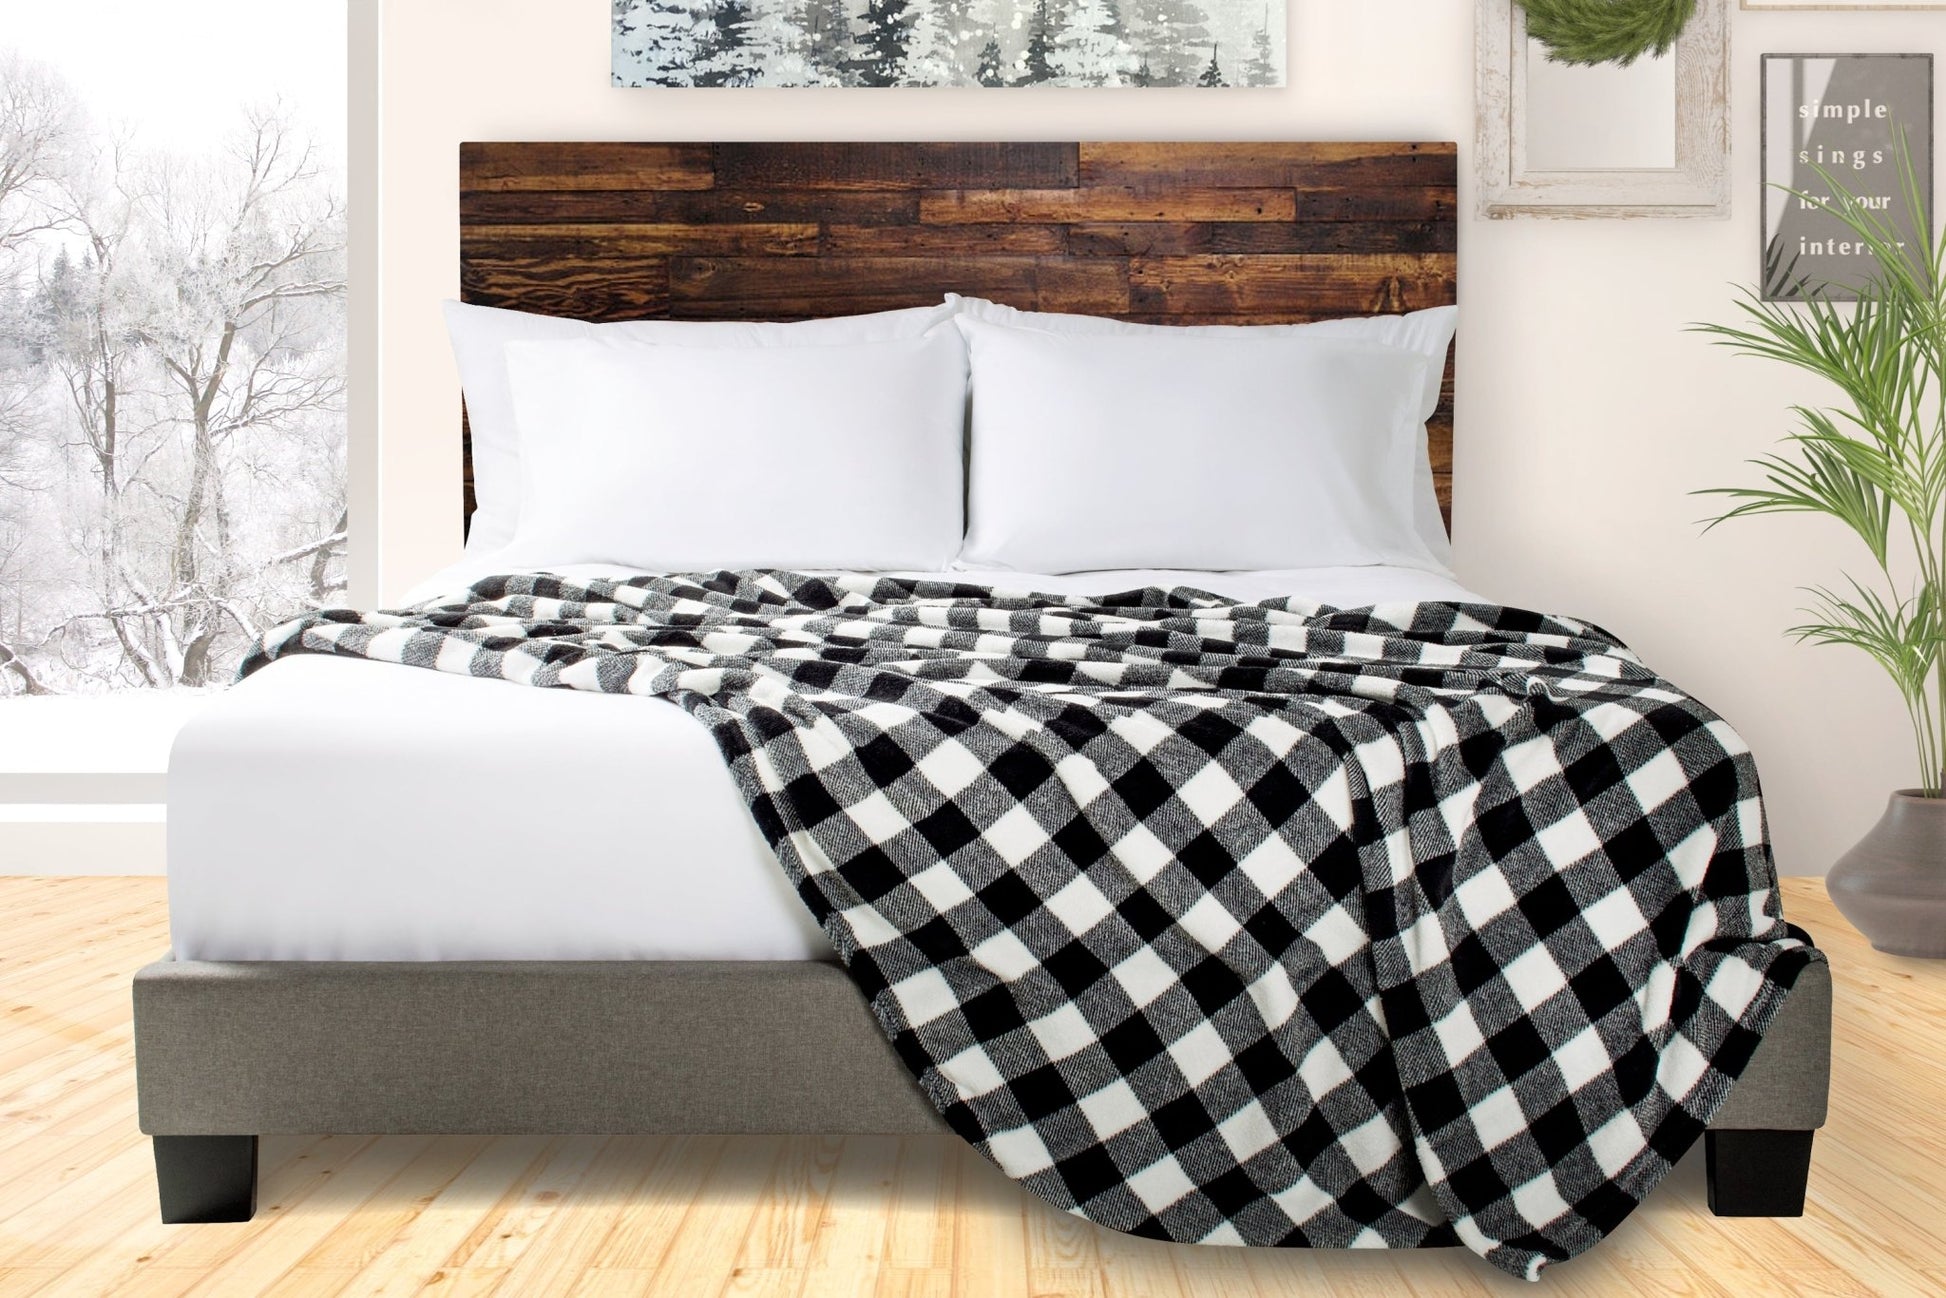 Super Soft Knit Blanket Throw Home Decor Bedding 86X86 Black - DecoElegance - Blanket Throw Home Bedding